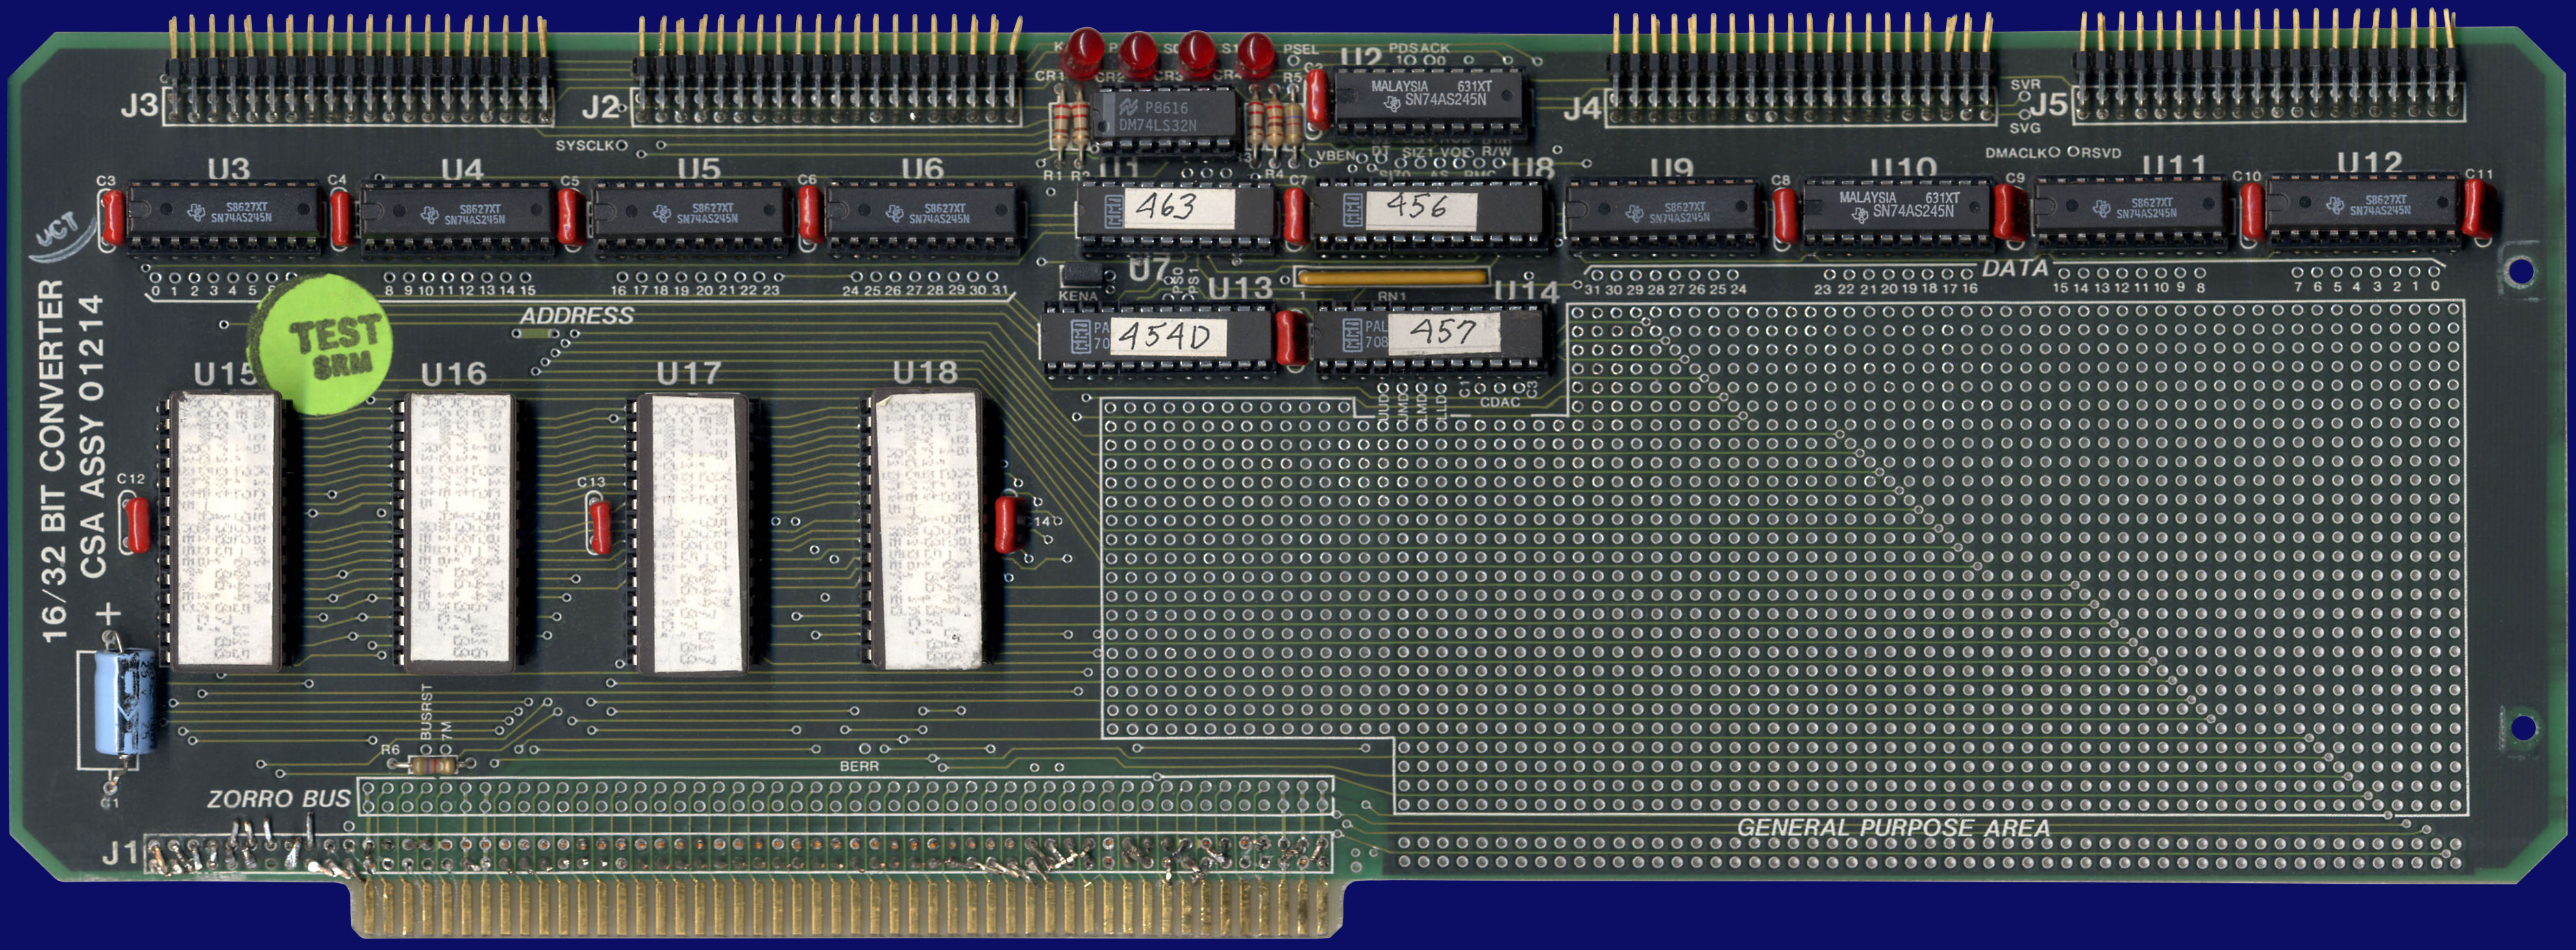 Computer System Associates Turbo Amiga CPU (A2000) - DragStrip 16/32 Bit Converter, front side